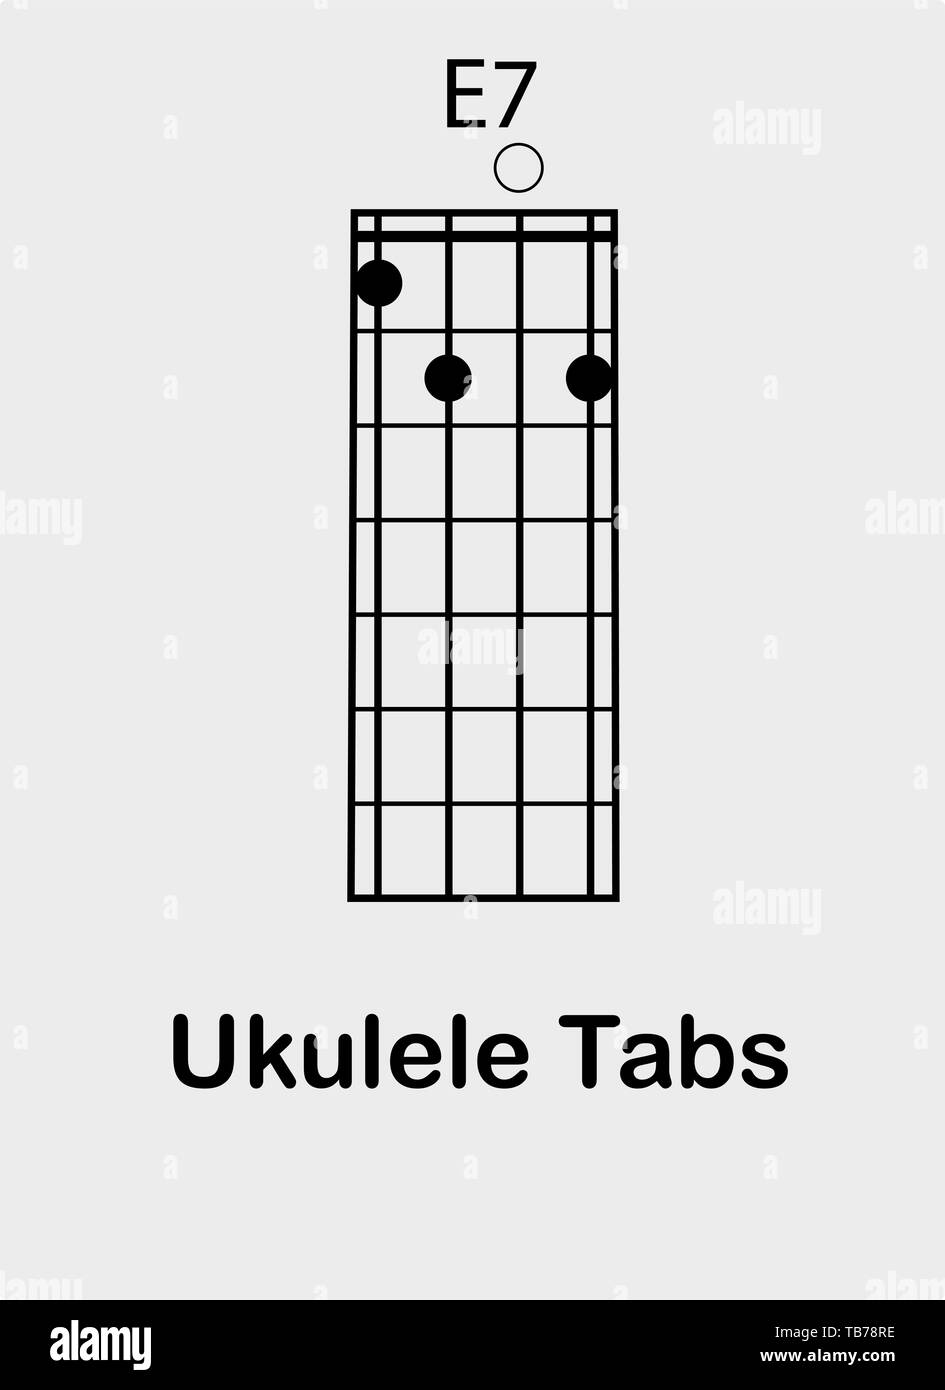 Ukulele tabulator with E seventh chord, vector illustration Stock Vector